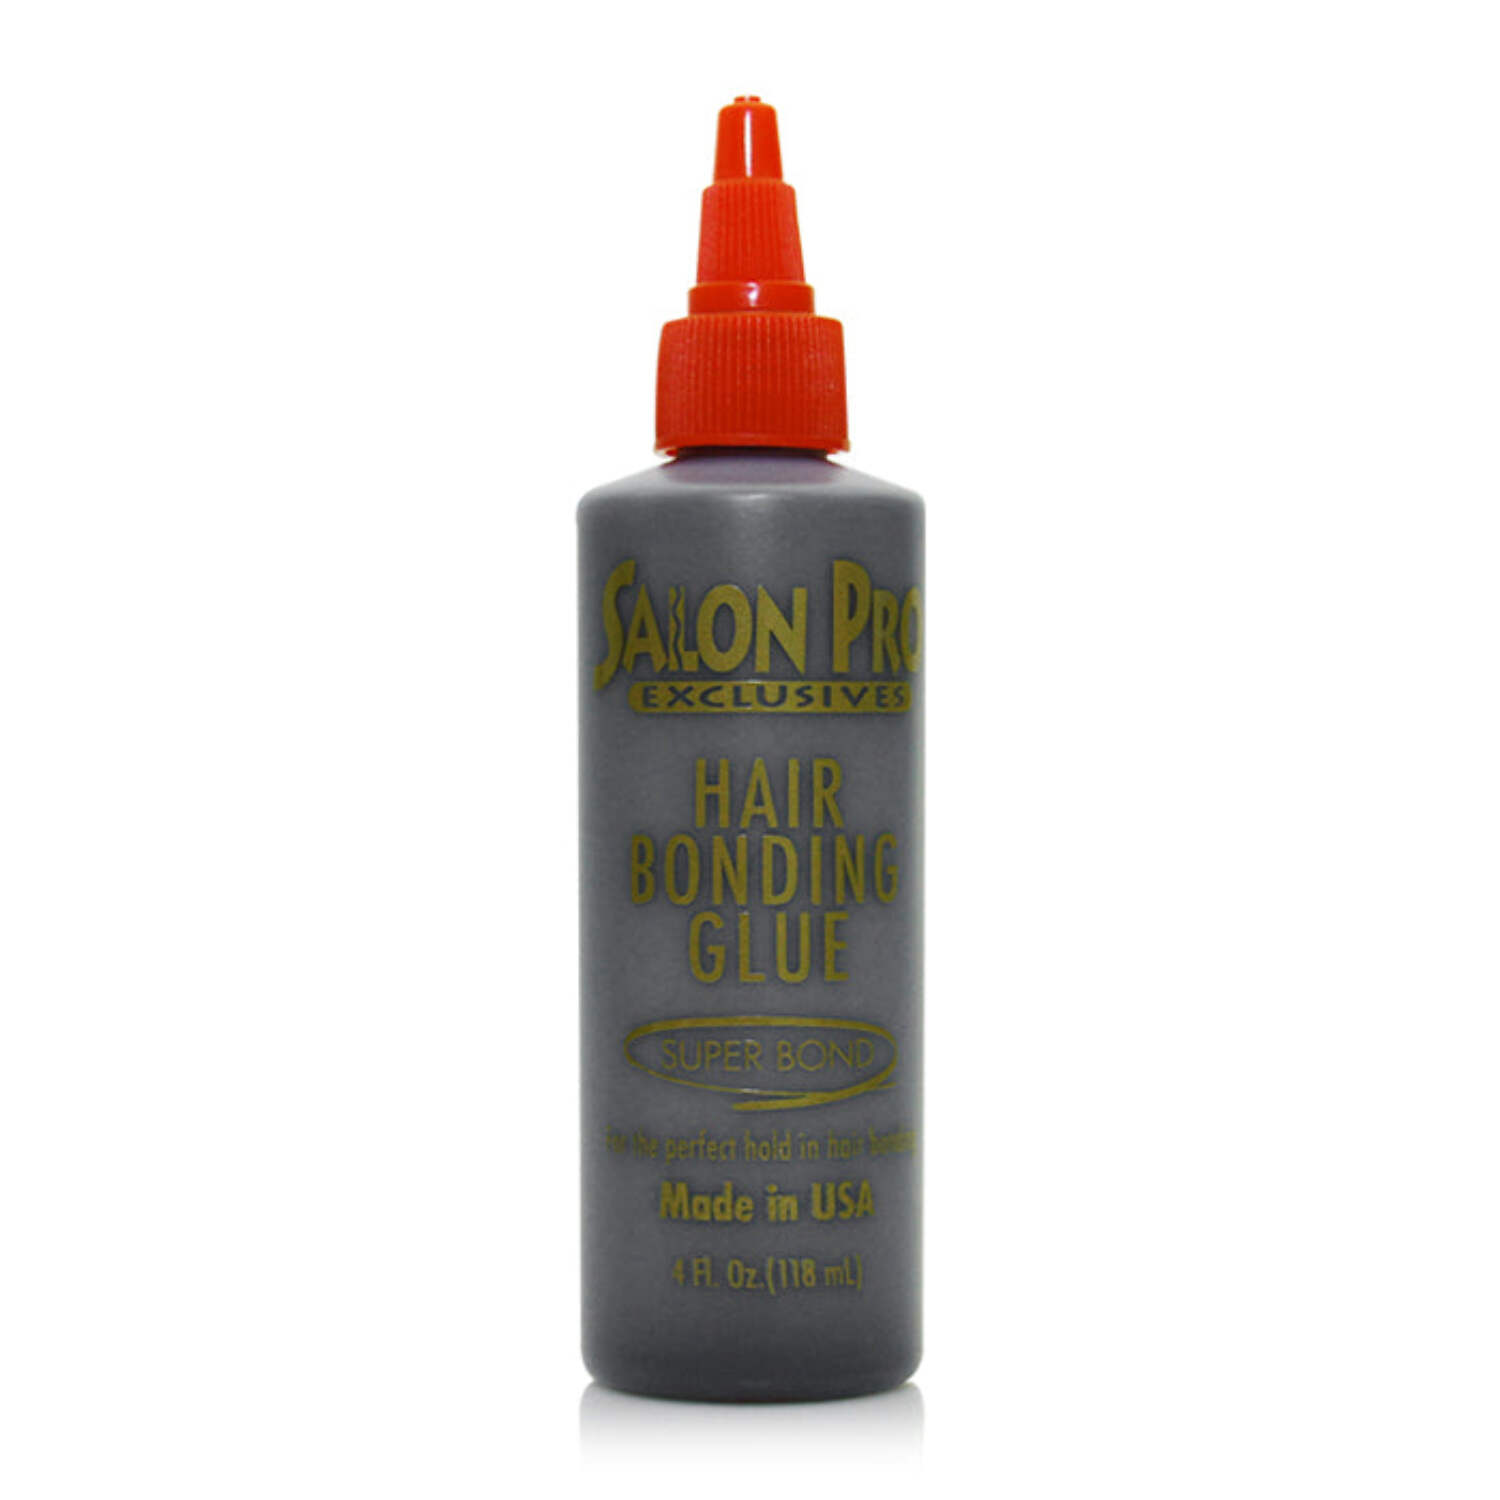 Salon Pro Hair Bond Glue, Black, 1 Oz